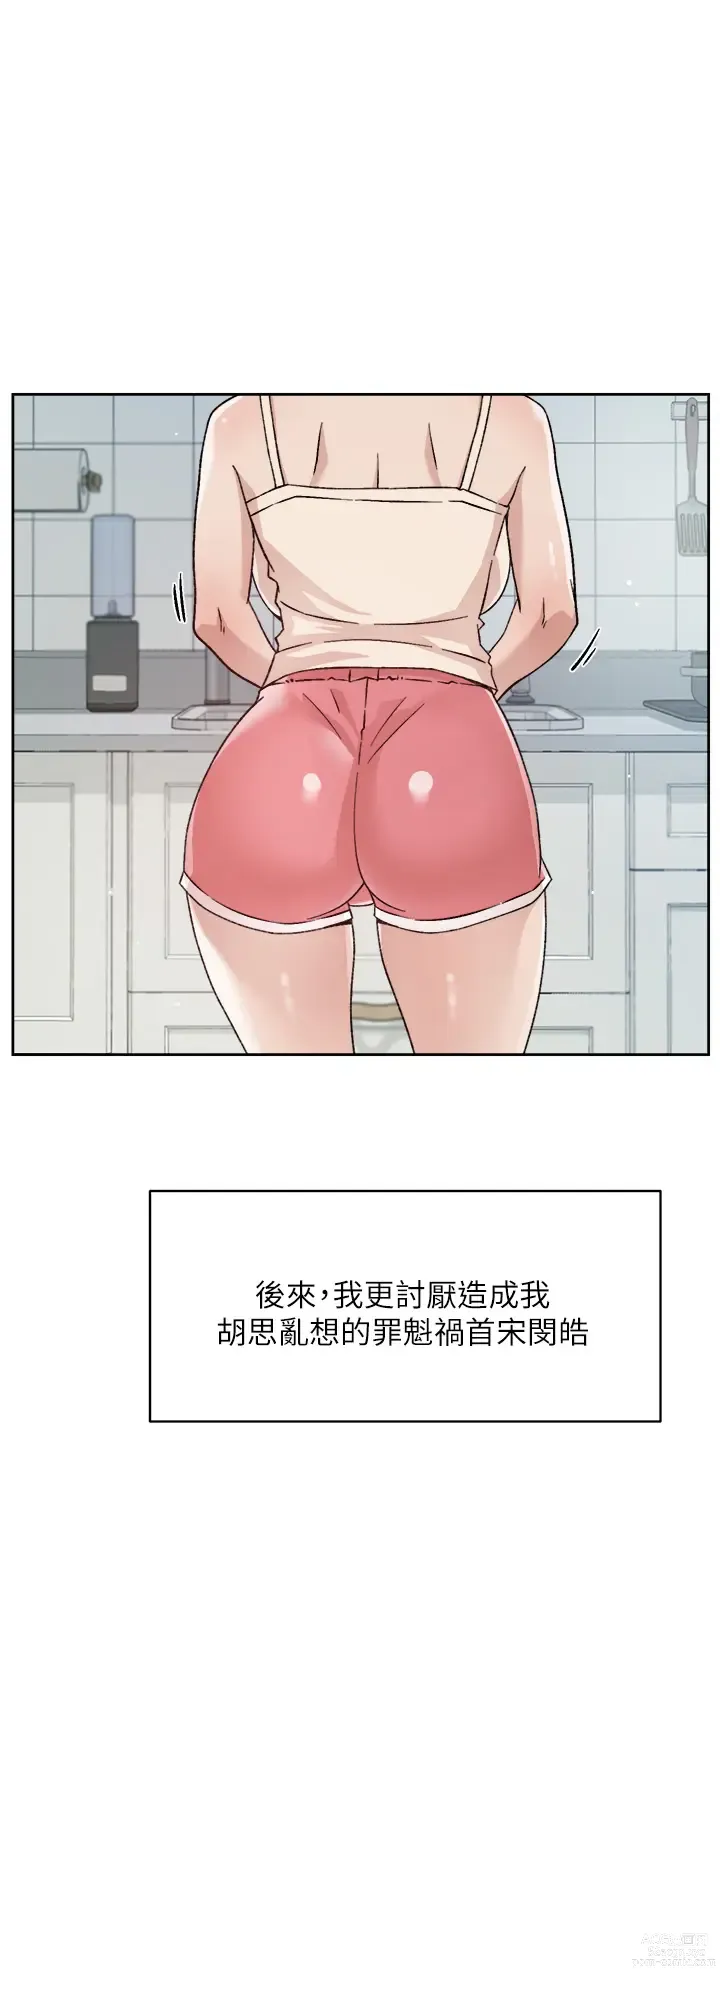 Page 957 of manga 好友的私生活